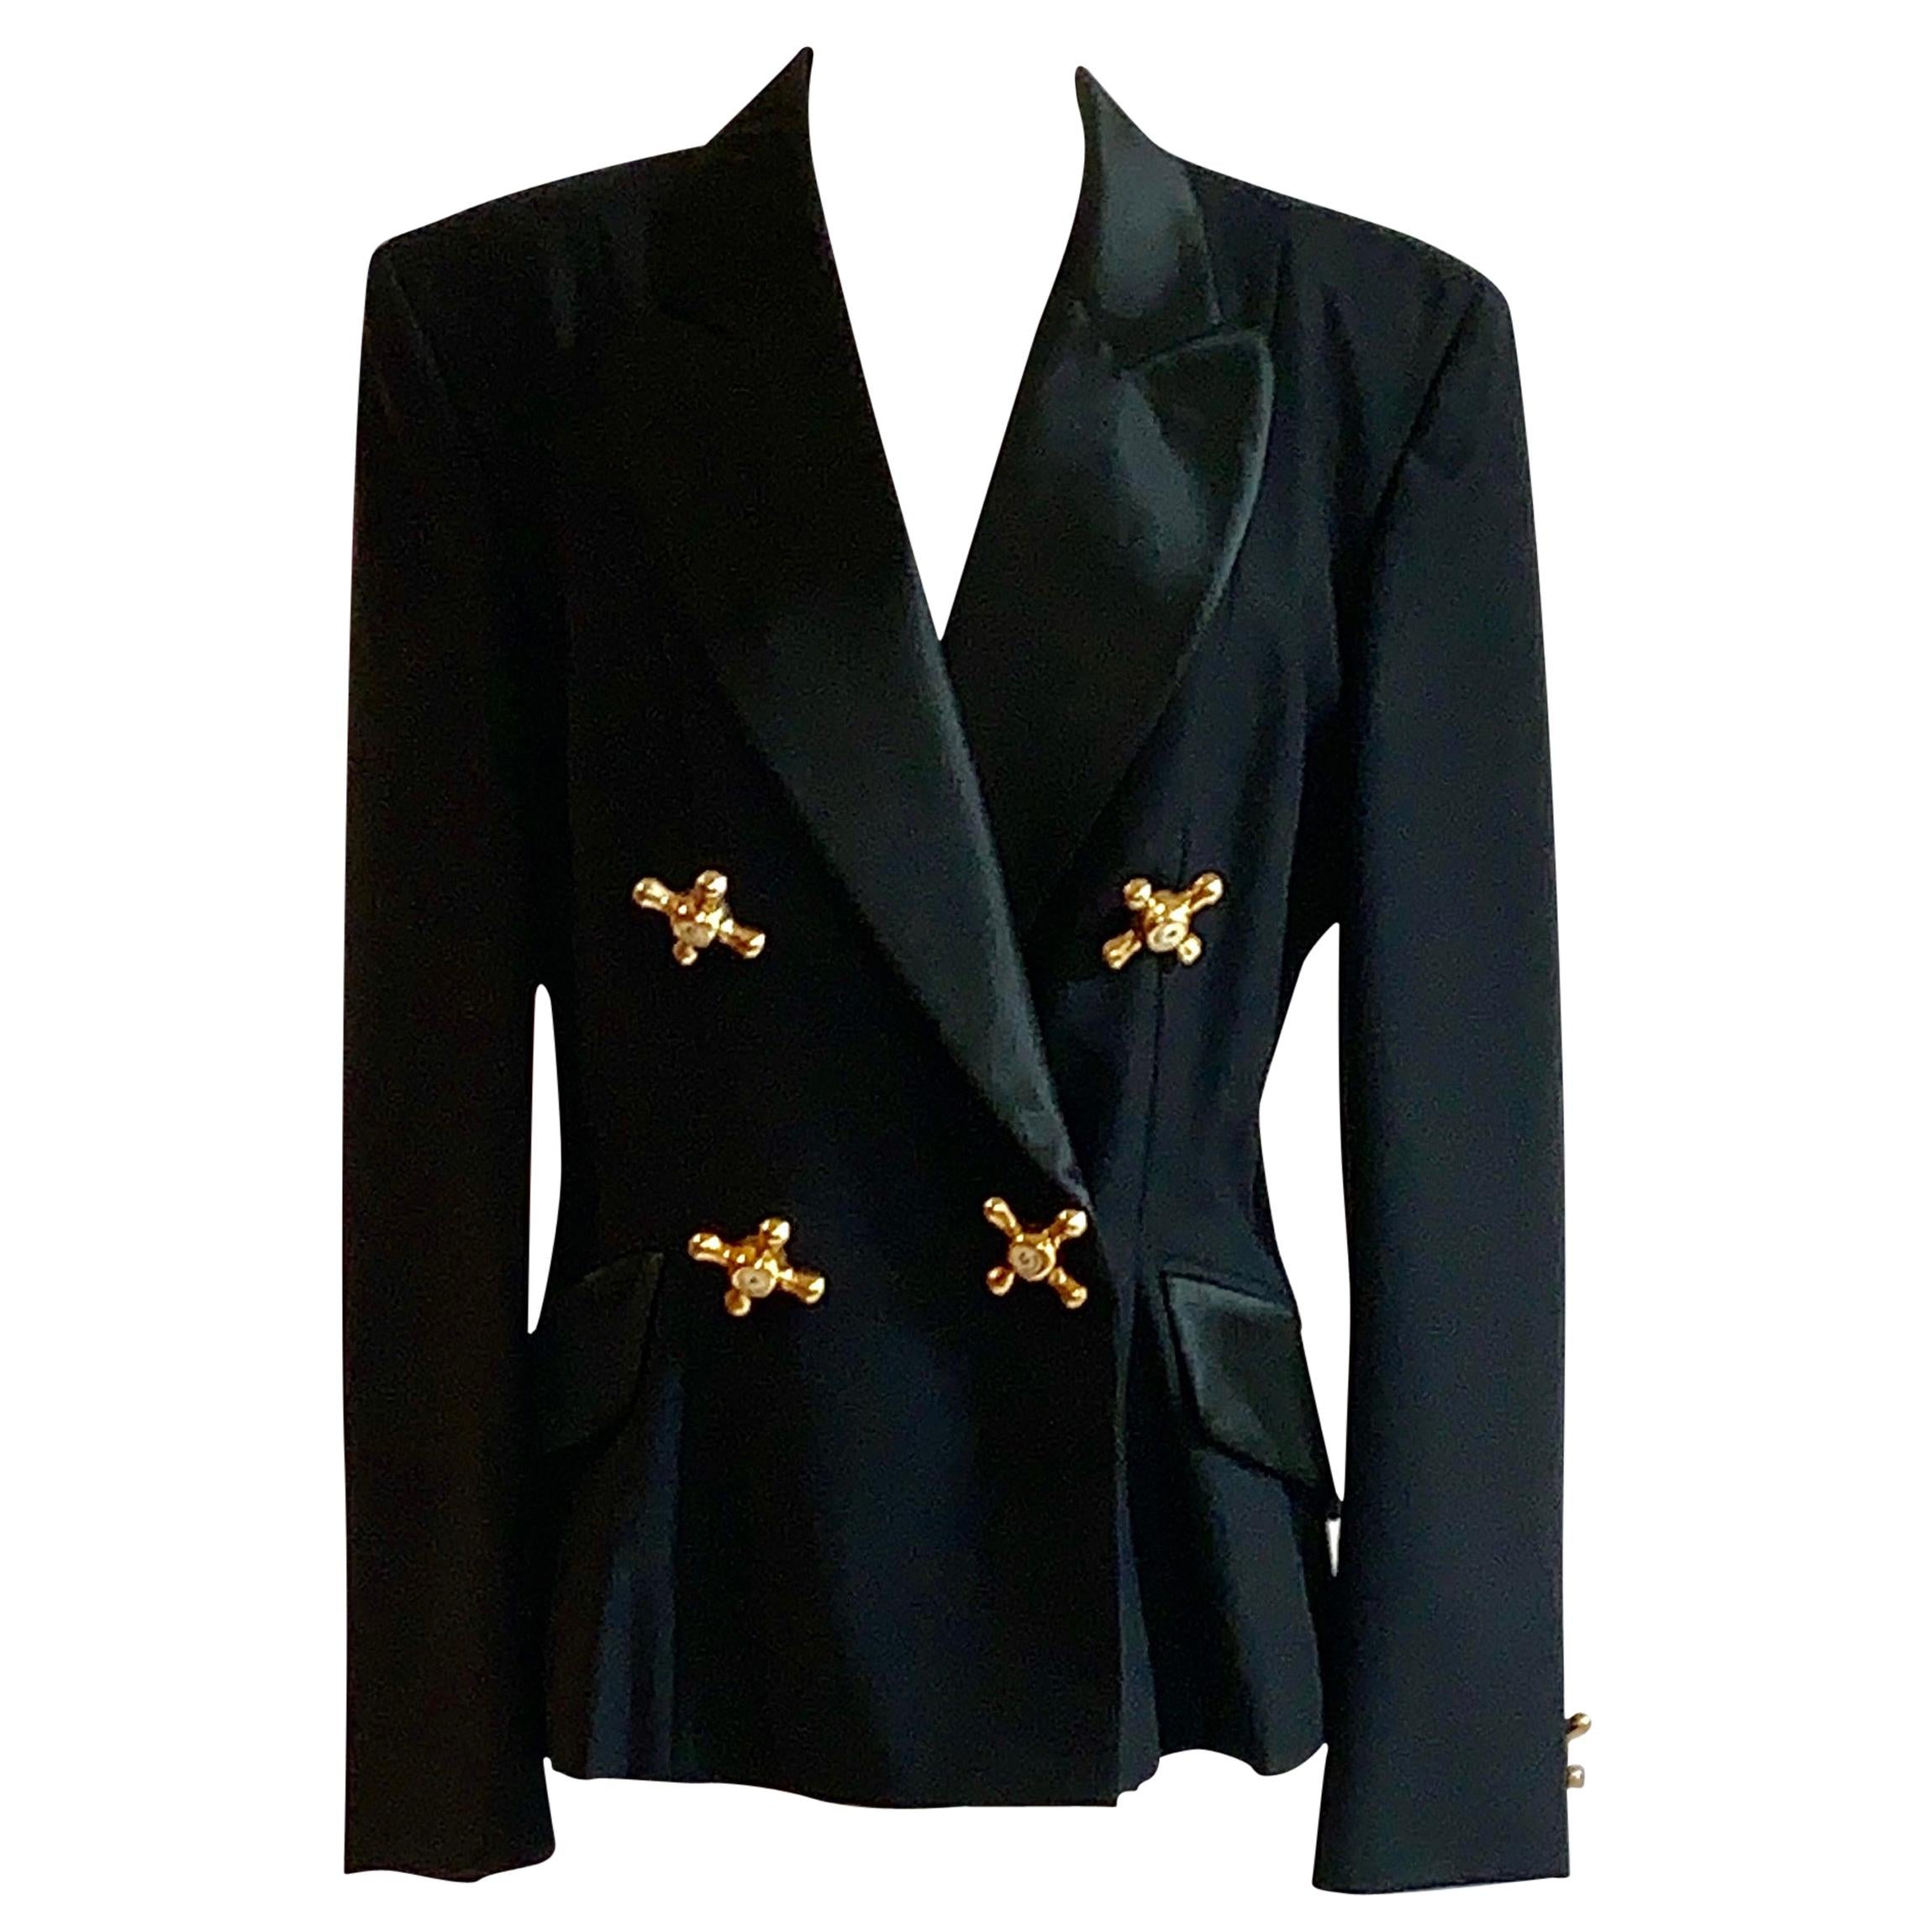 Moschino Cheap & Chic Vintage 90s Faucet Embellished Black Tuxedo Jacket Blazer